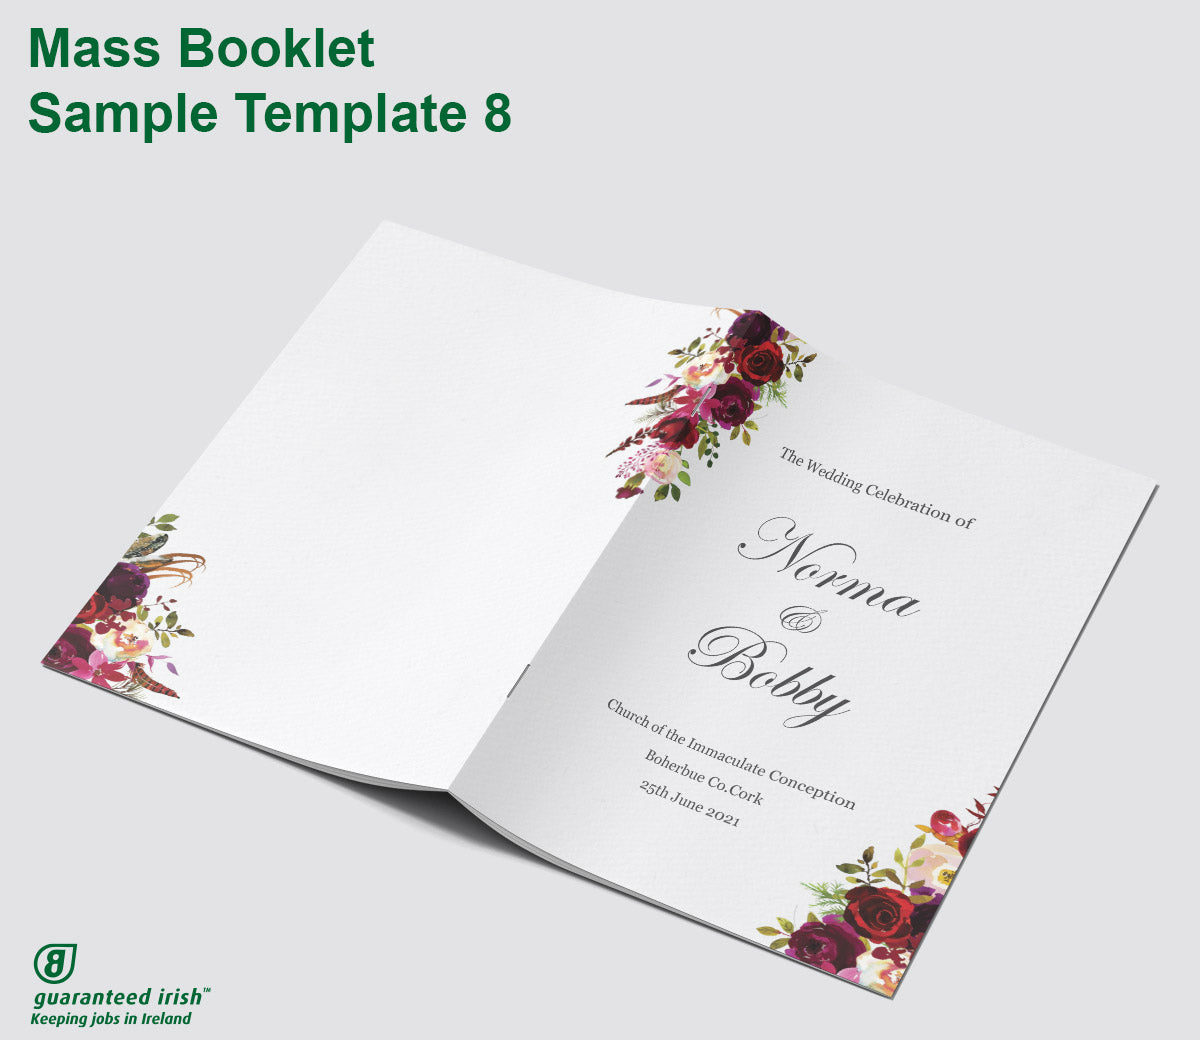 Wedding Mass Booklets - Sample 8